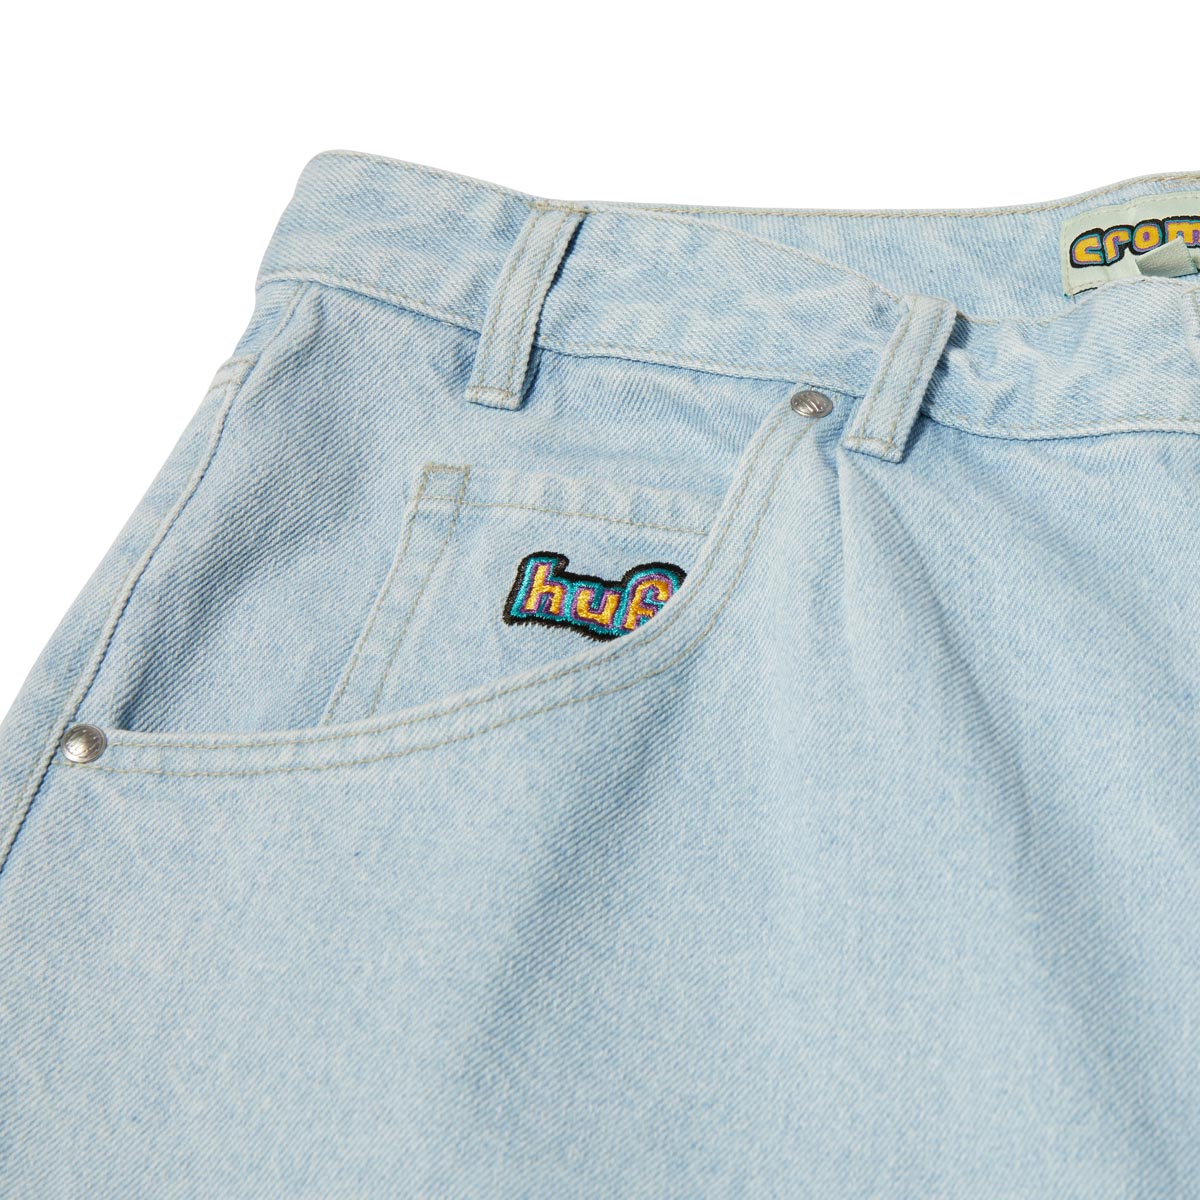 HUF Cromer Shorts - Light Blue image 3